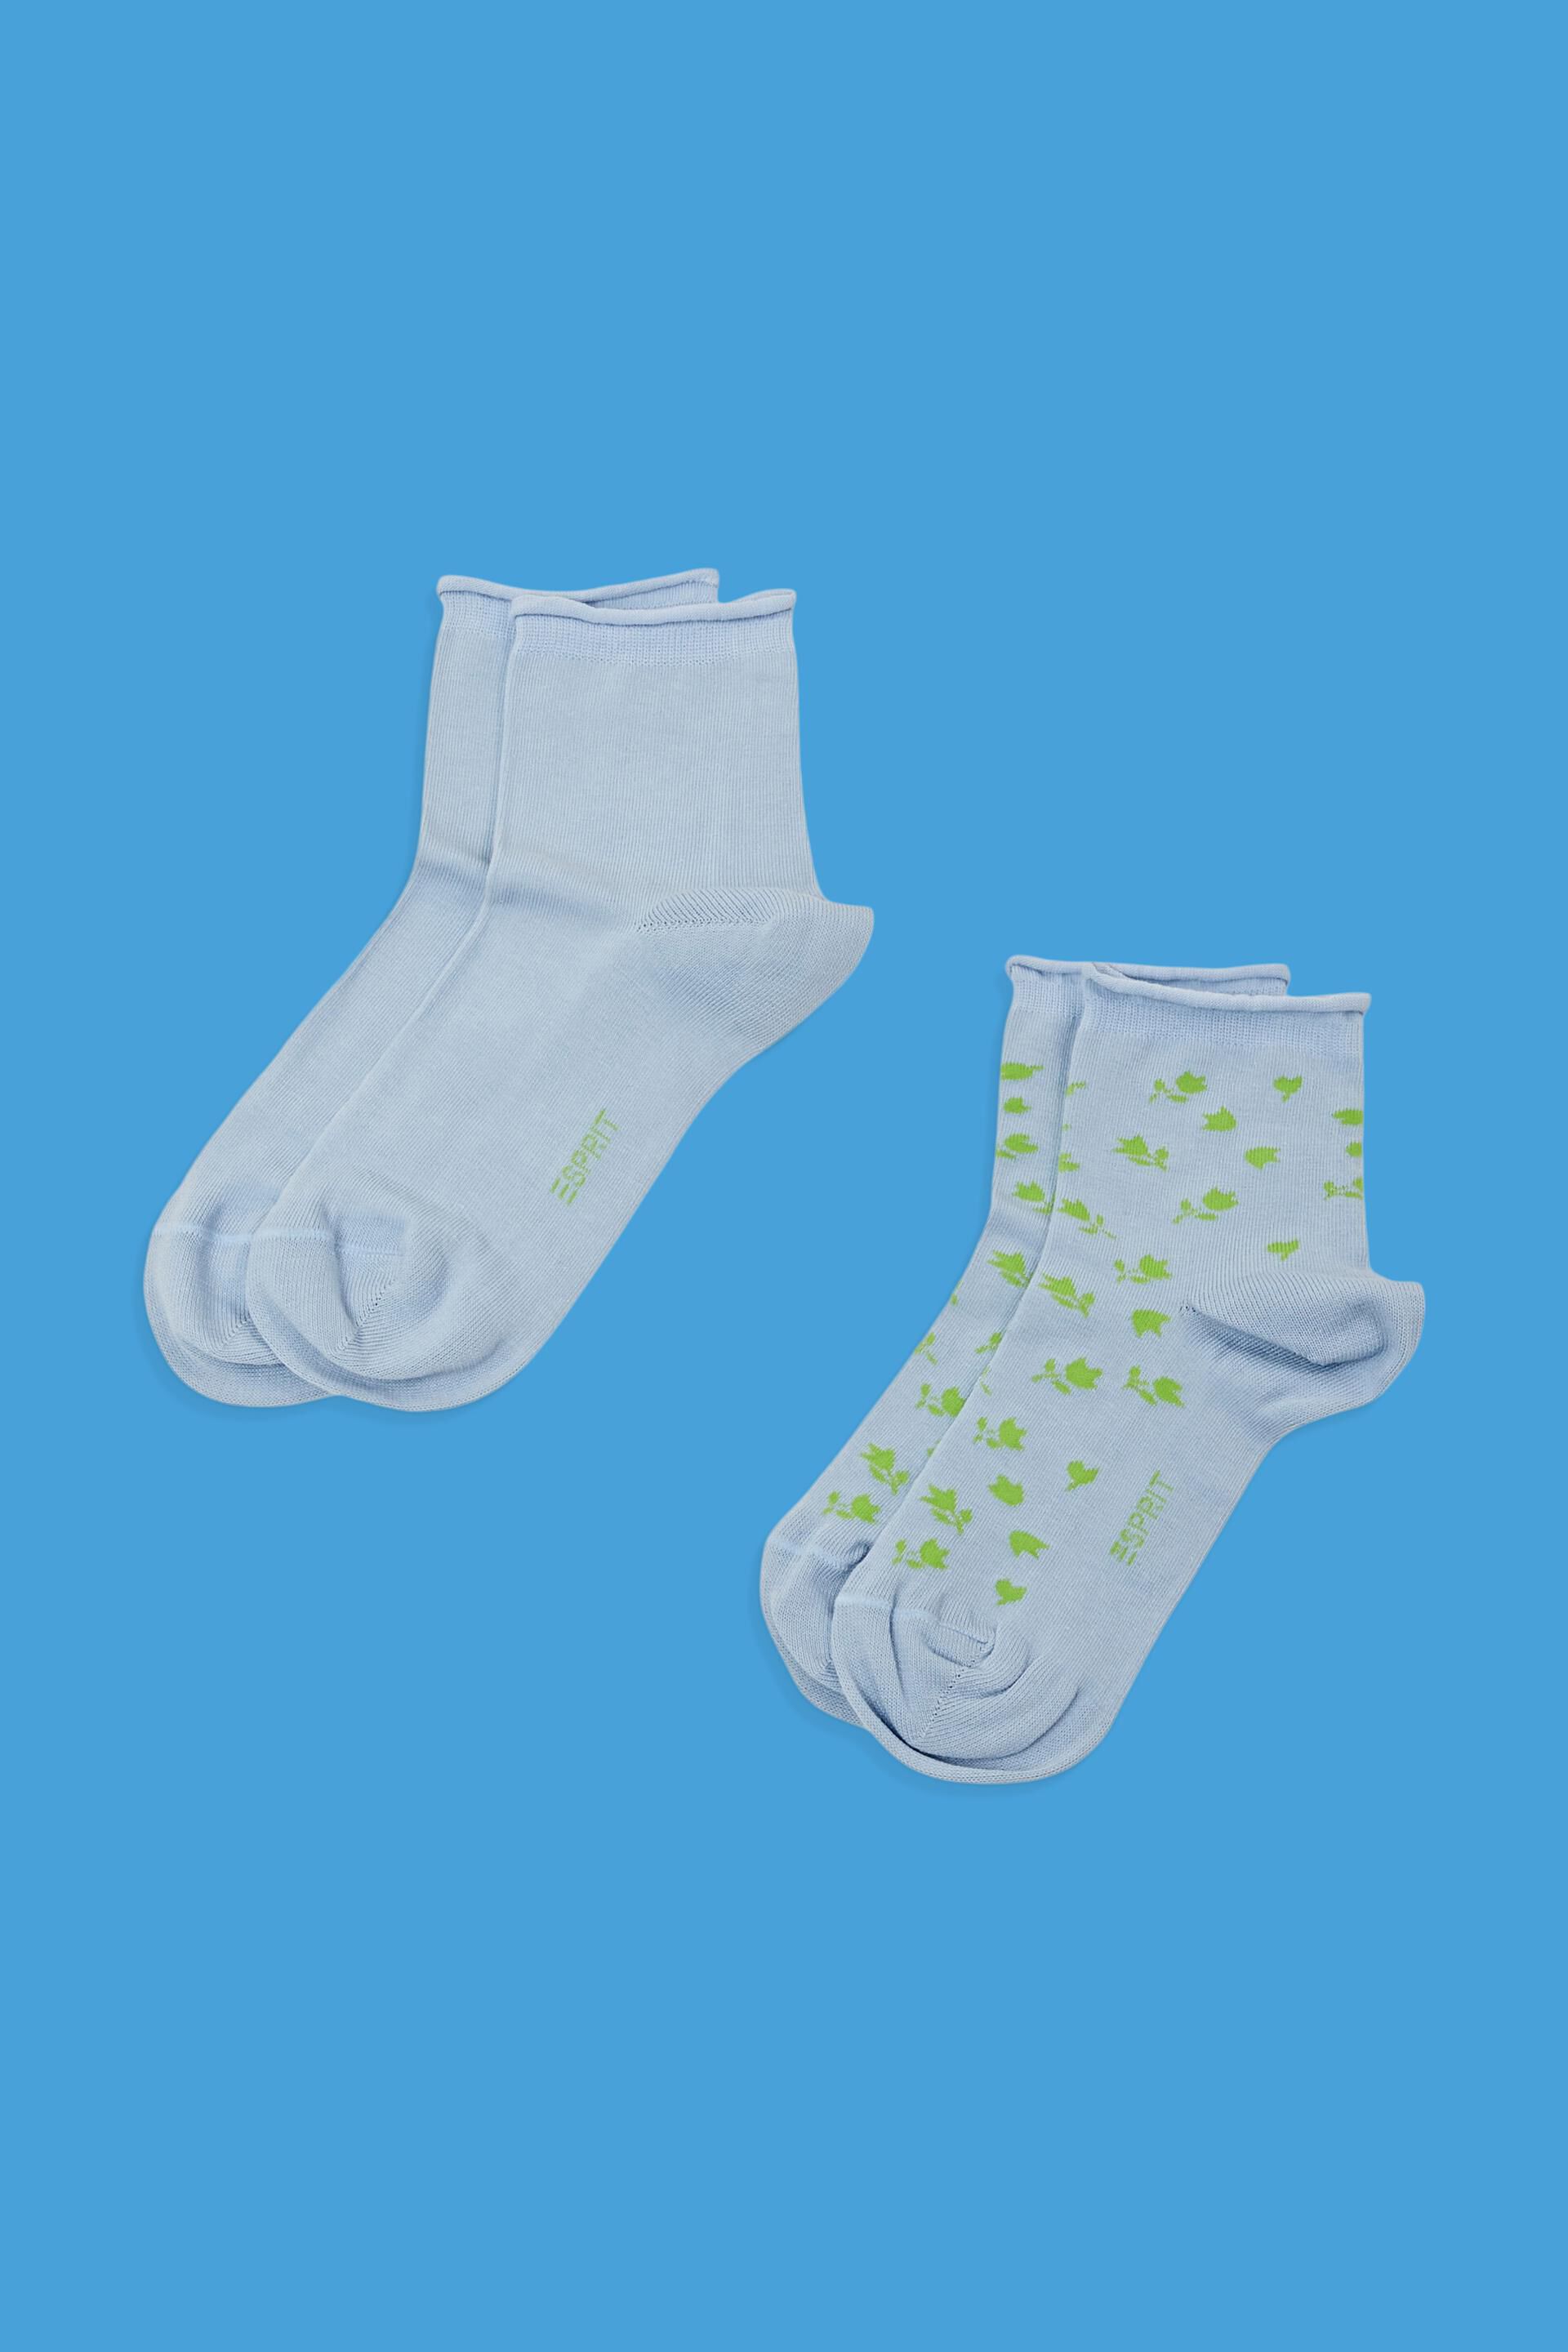 Esprit with 2-pack socks floral of short pattern